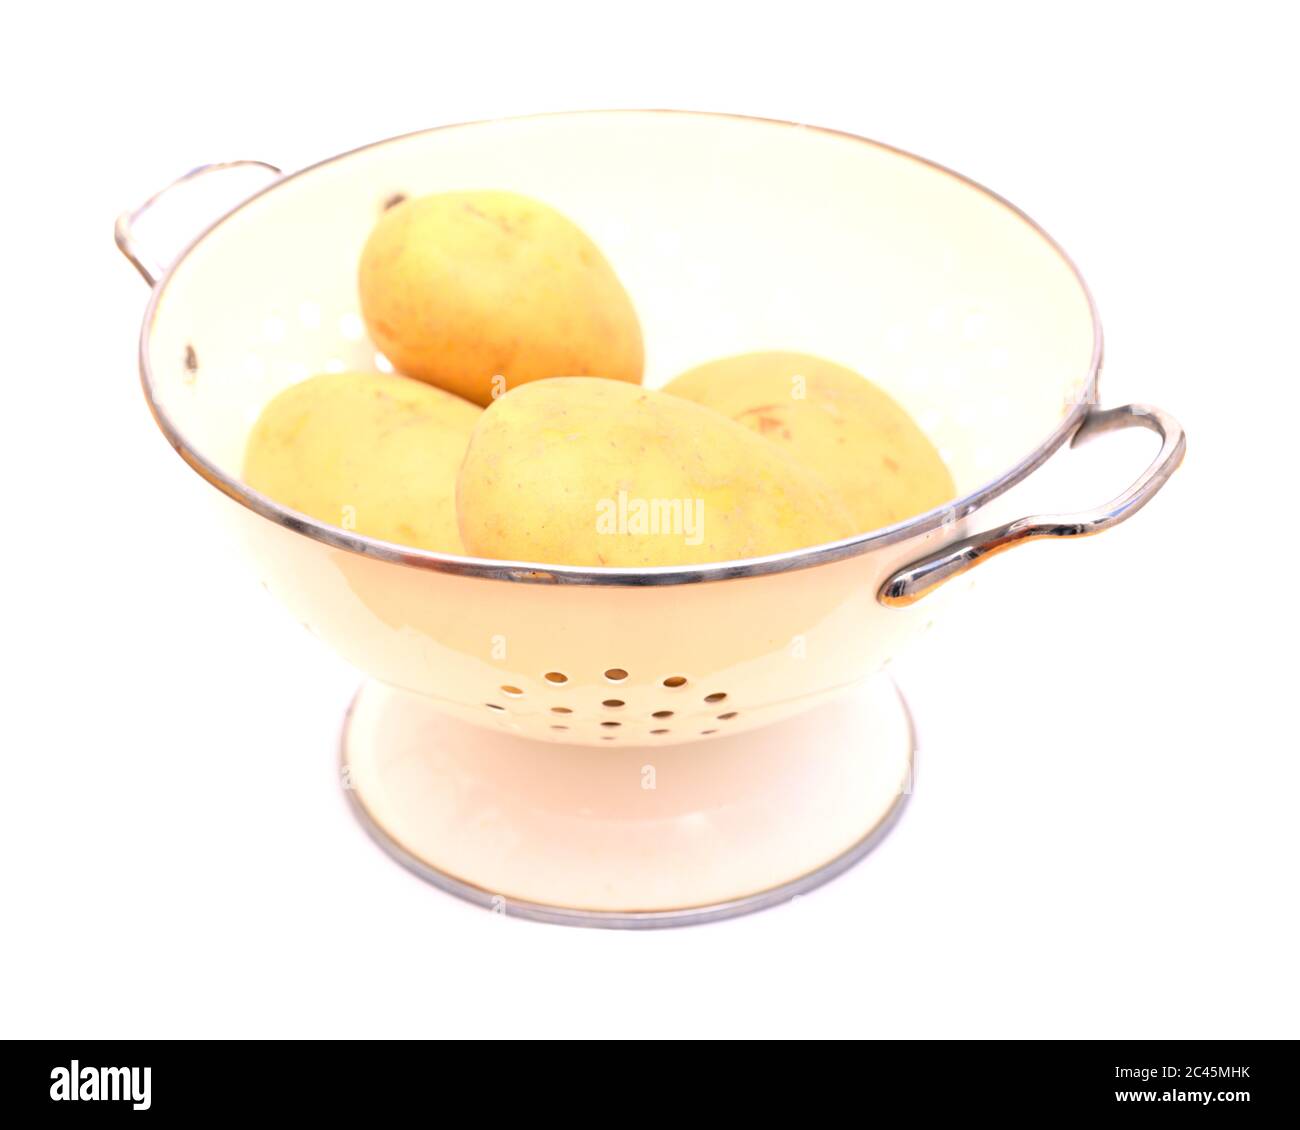 Large clean potato isolated on white Stock Photo